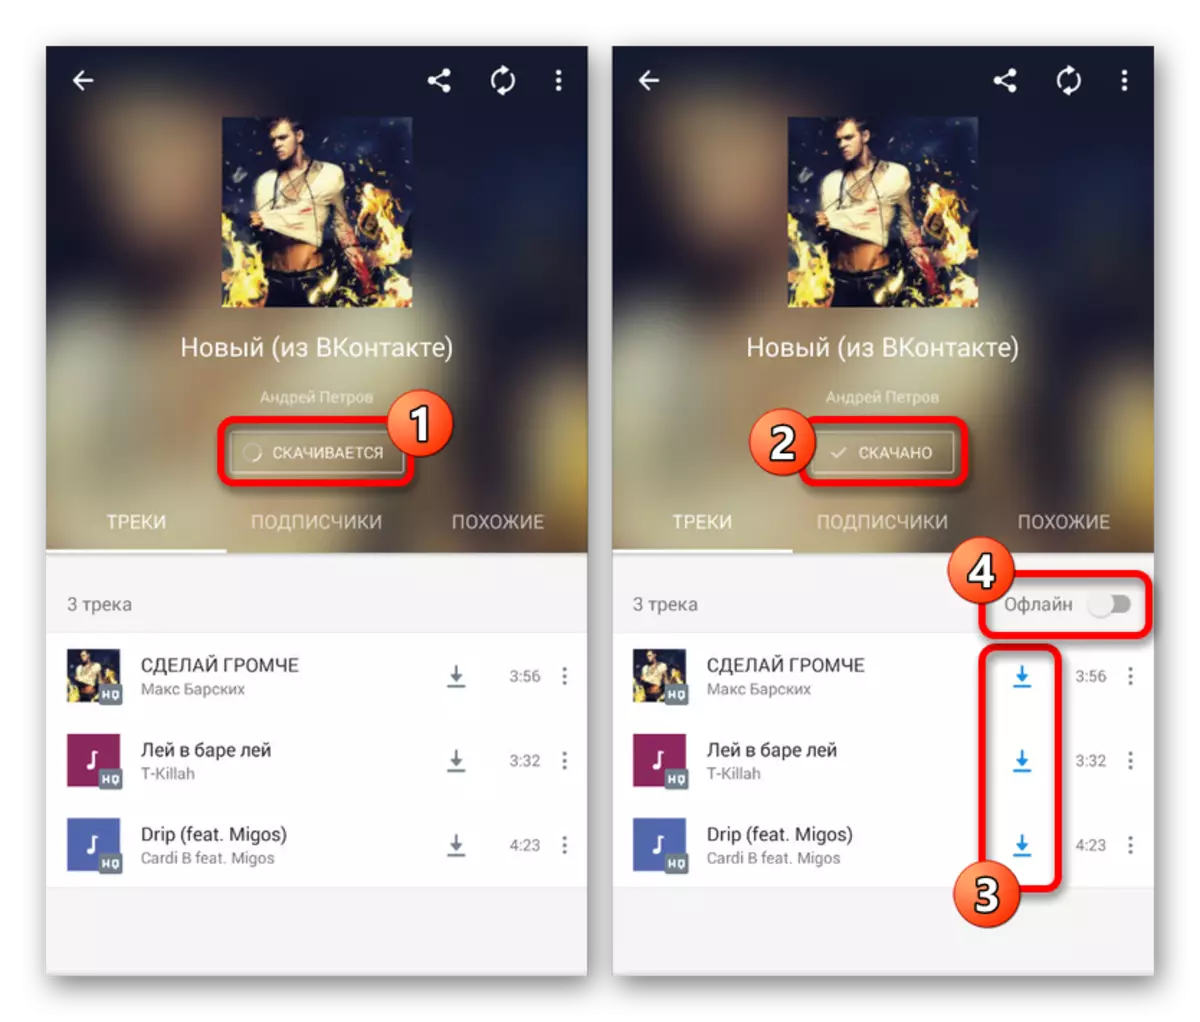 Sukcesa elŝuto de reprodukta muziko en Moosic en Android